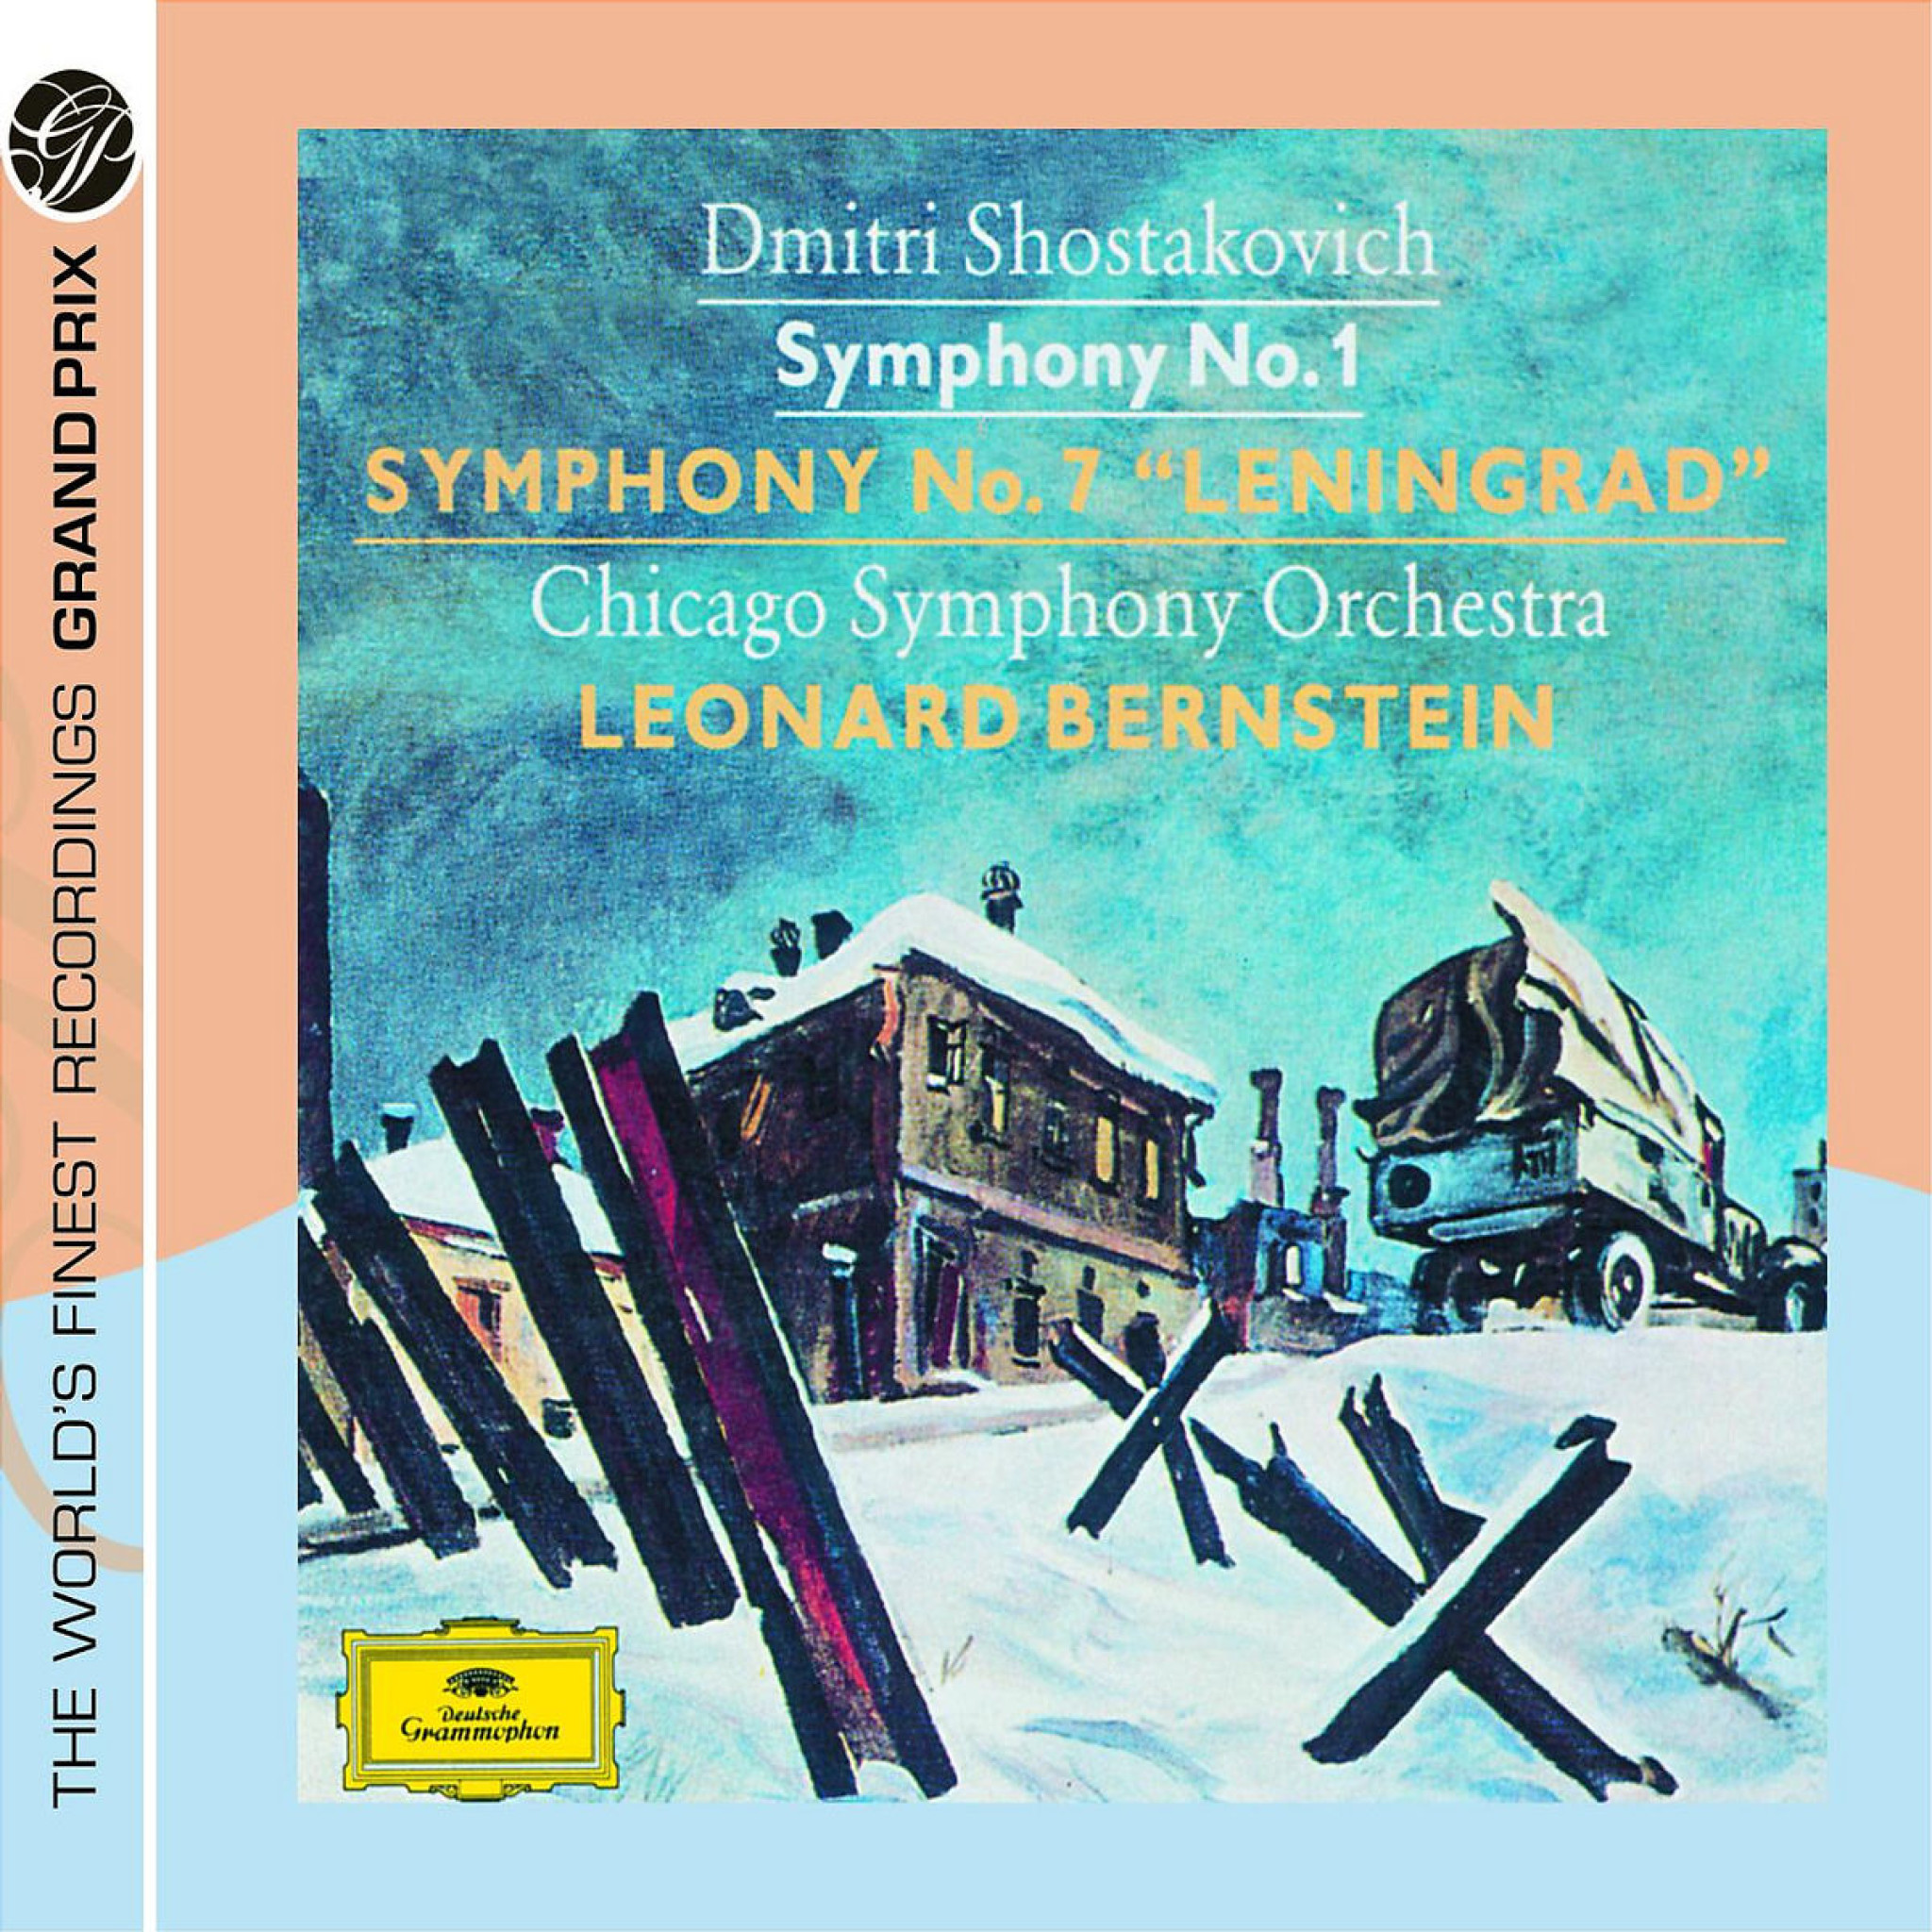 Shostakovich: Symphonies Nos.1 & 7 "Leningrad" 0028947775870